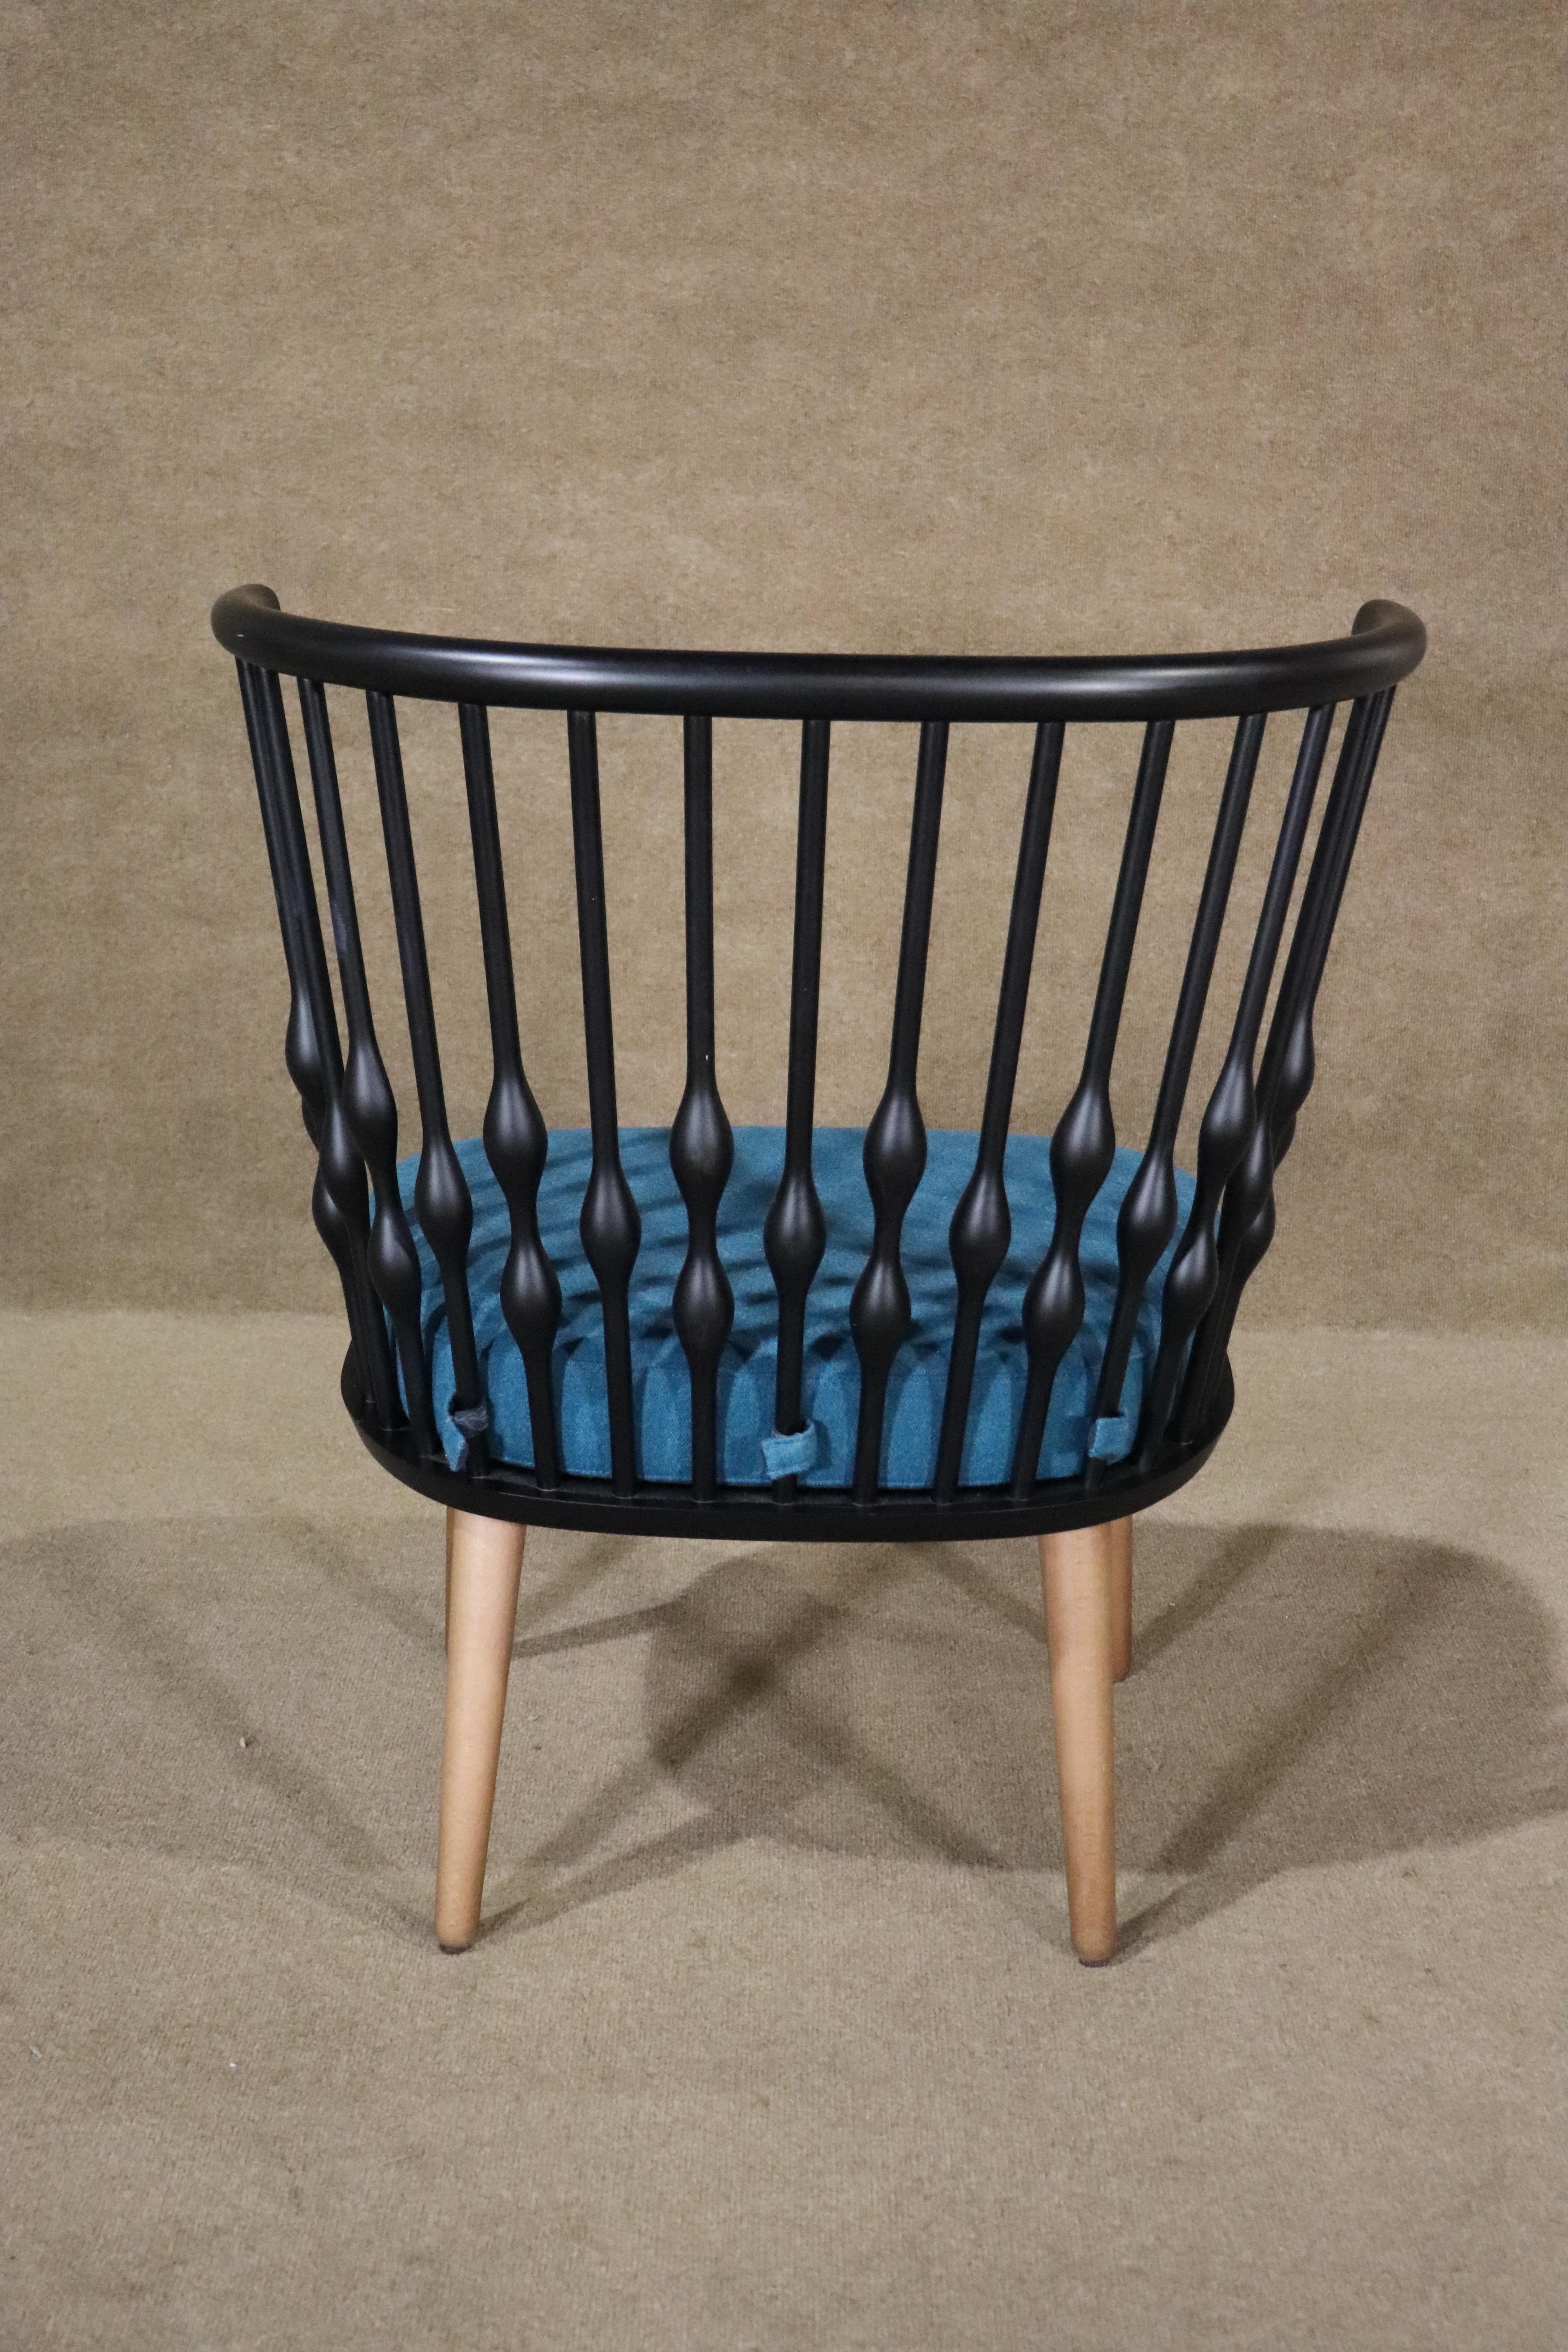 Wood Patricia Urquiola Designed 'Nub' Chair For Sale